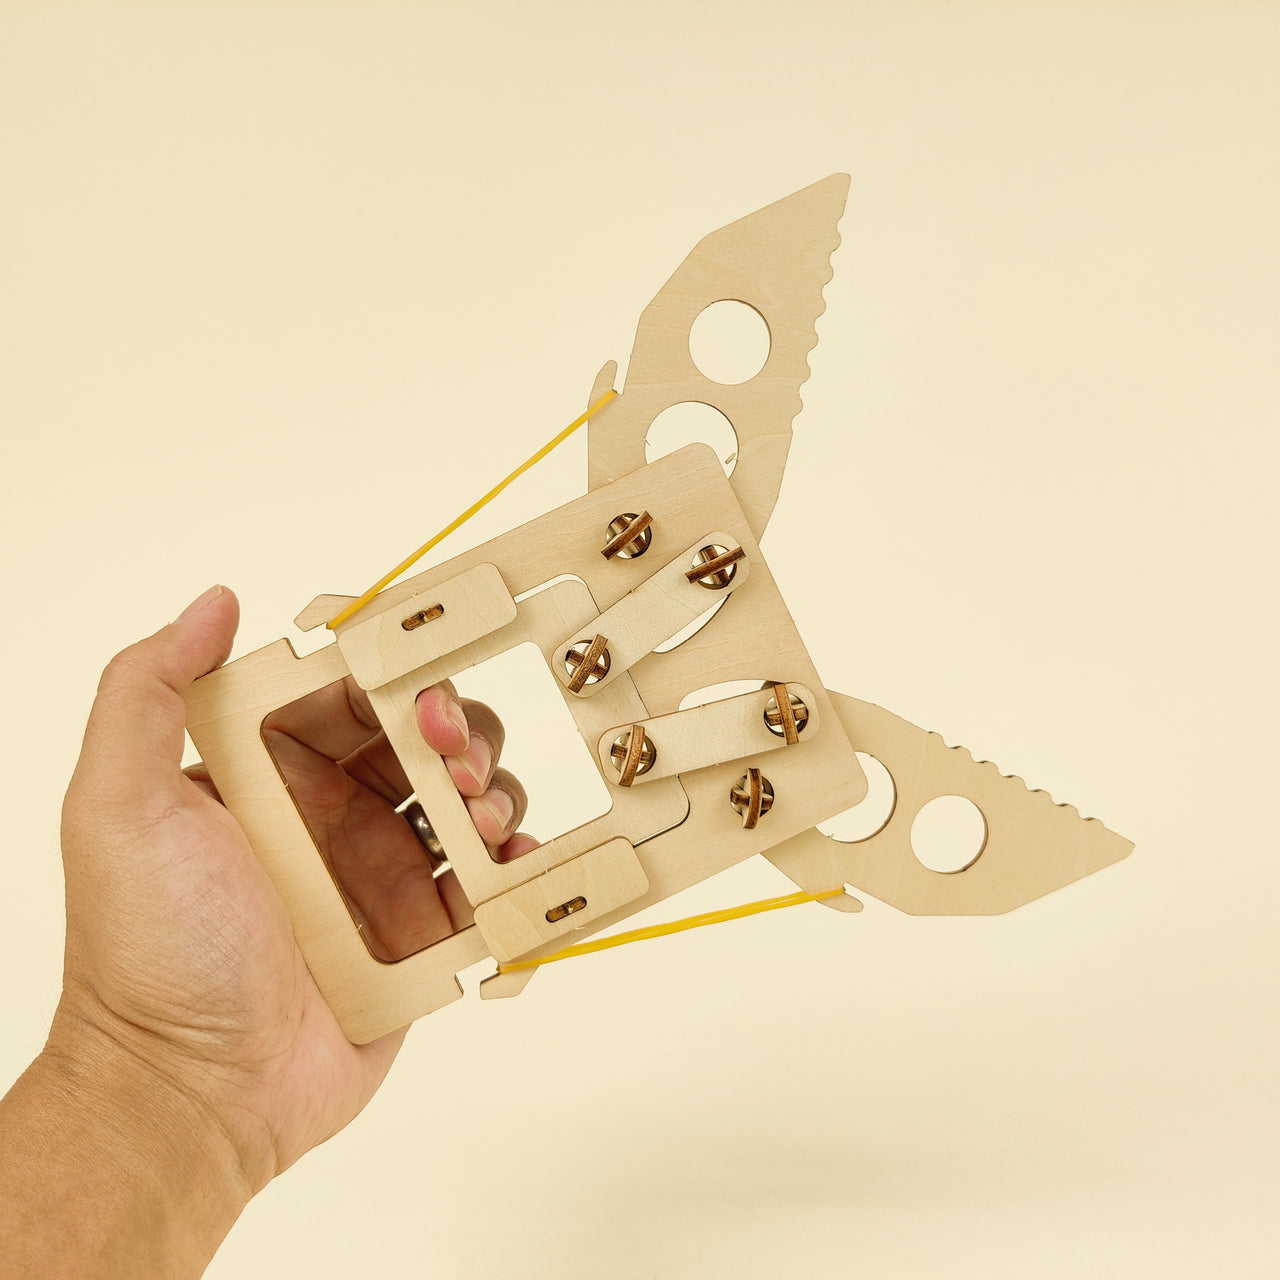 CreateKit Mechanical Claw DIY Kit